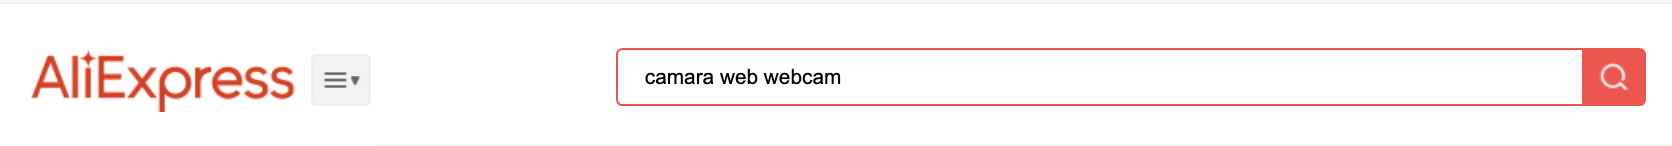 buscar camara web webcam en aliexpress